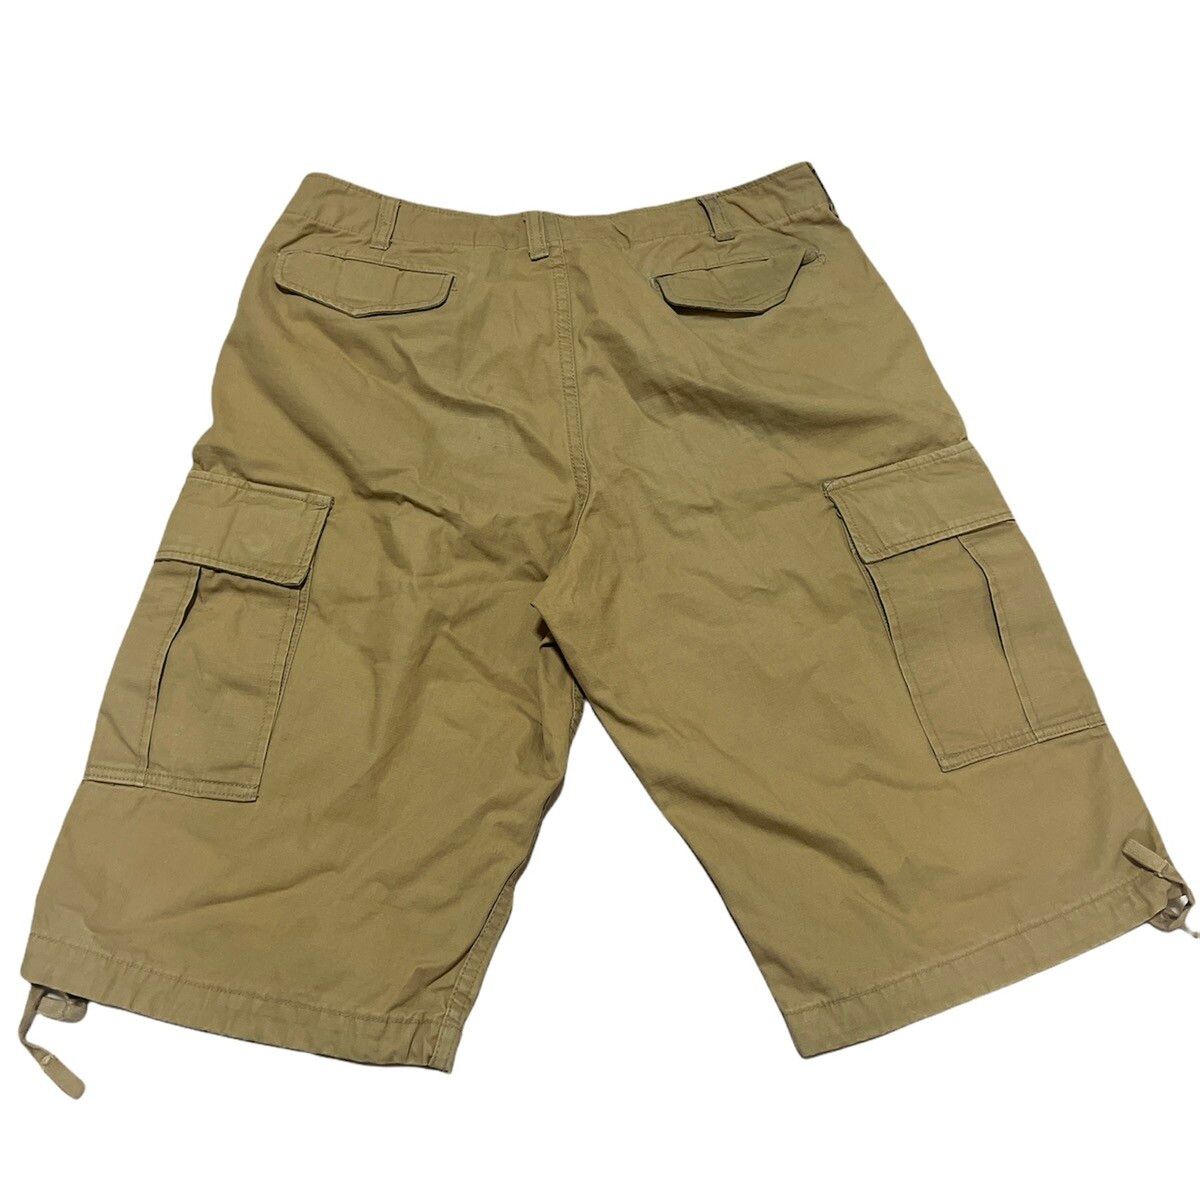 2003 General Research Cargo Short Pants - 9